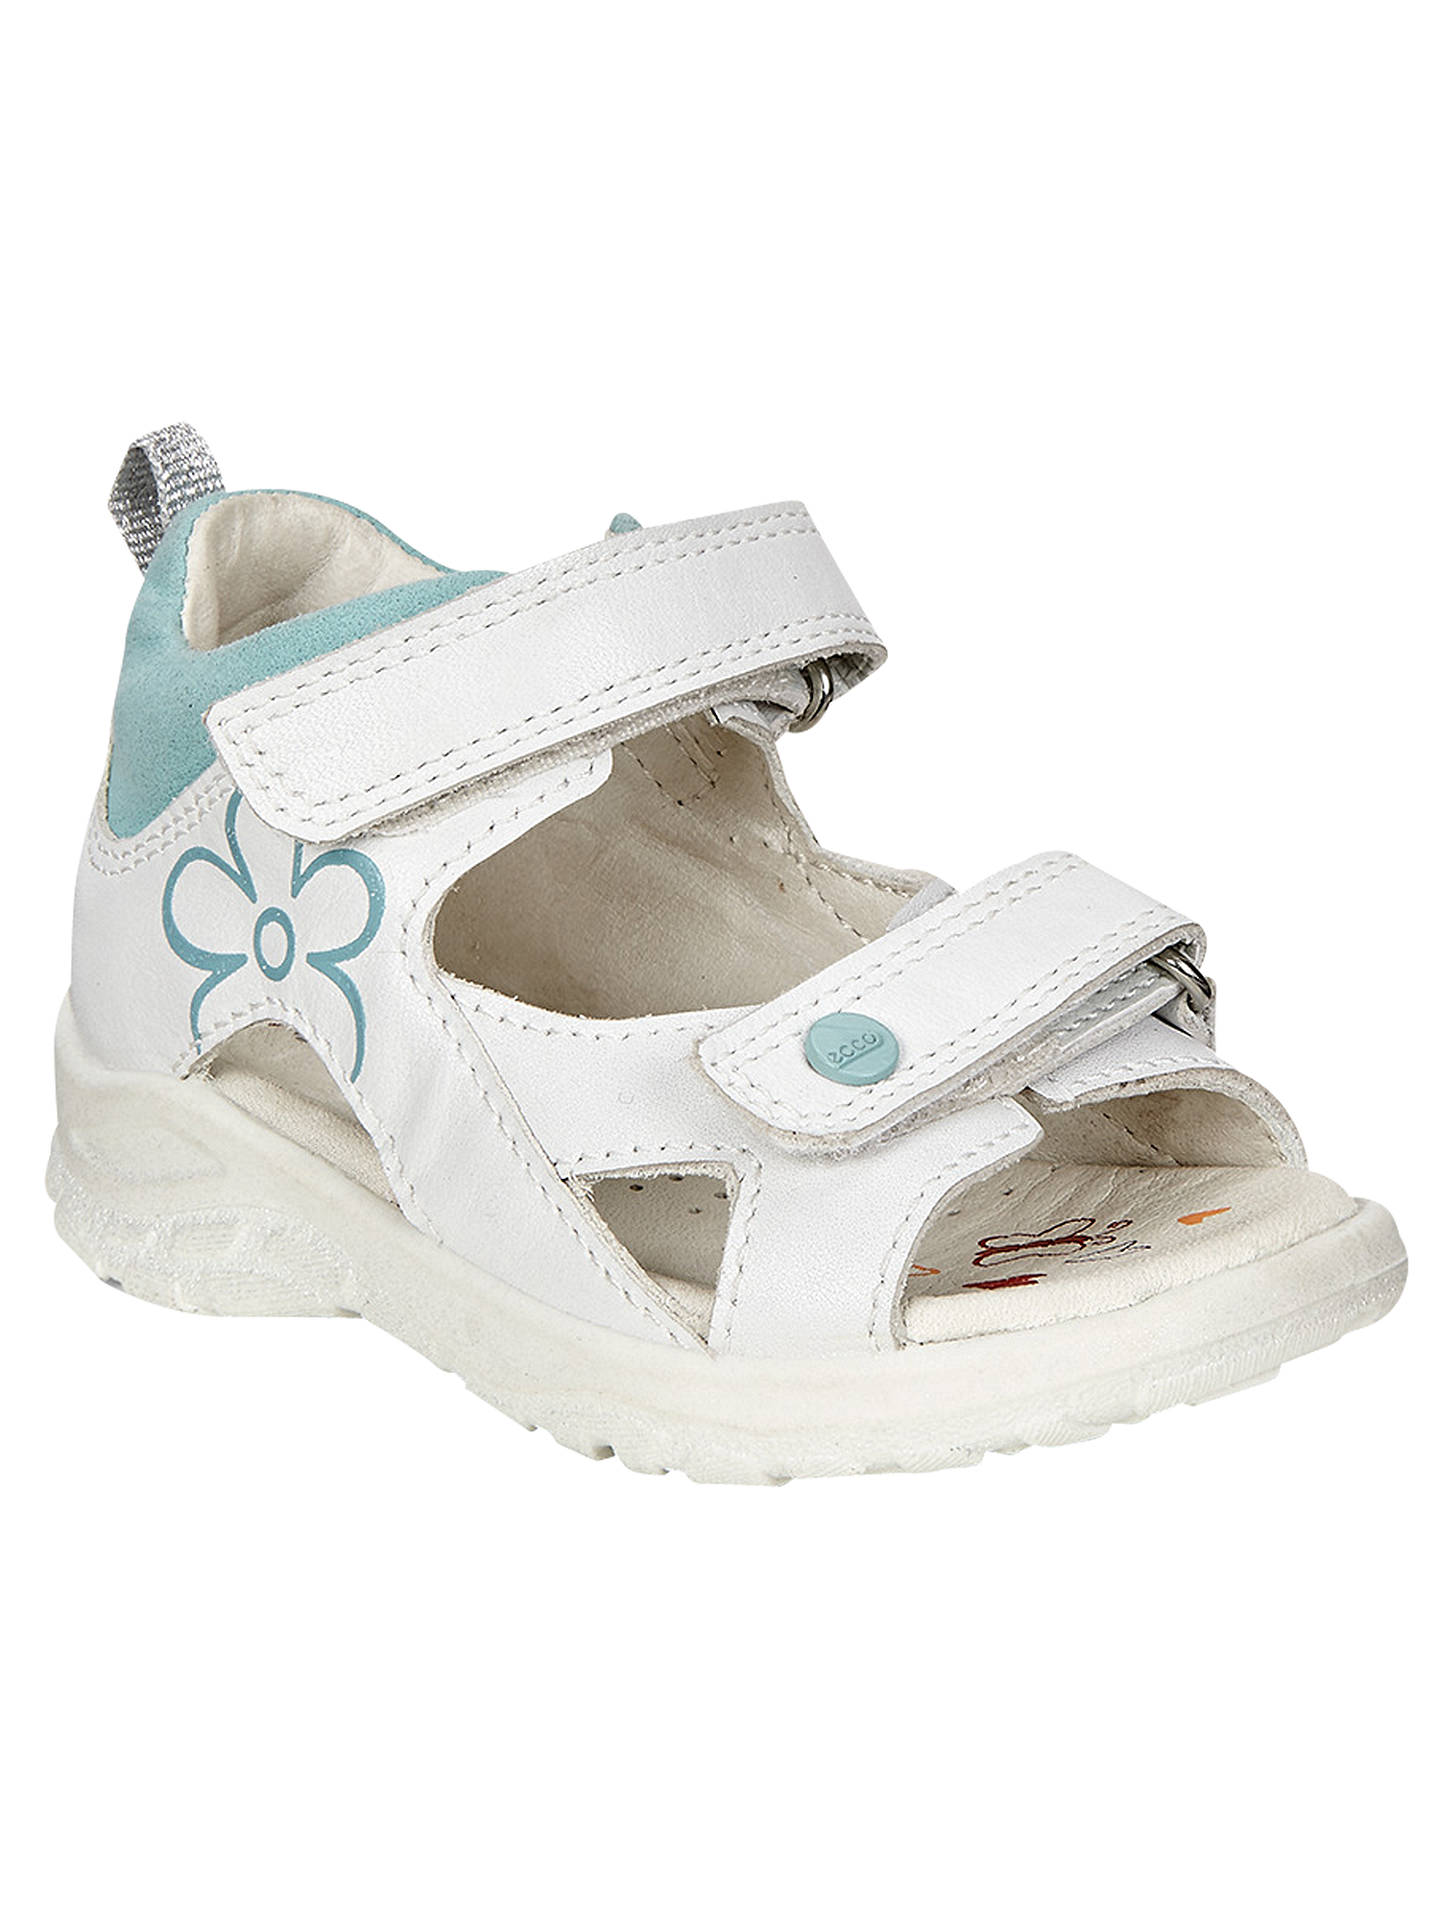 ECCO Children's Peekaboo Sandals, White at John Lewis & Partners